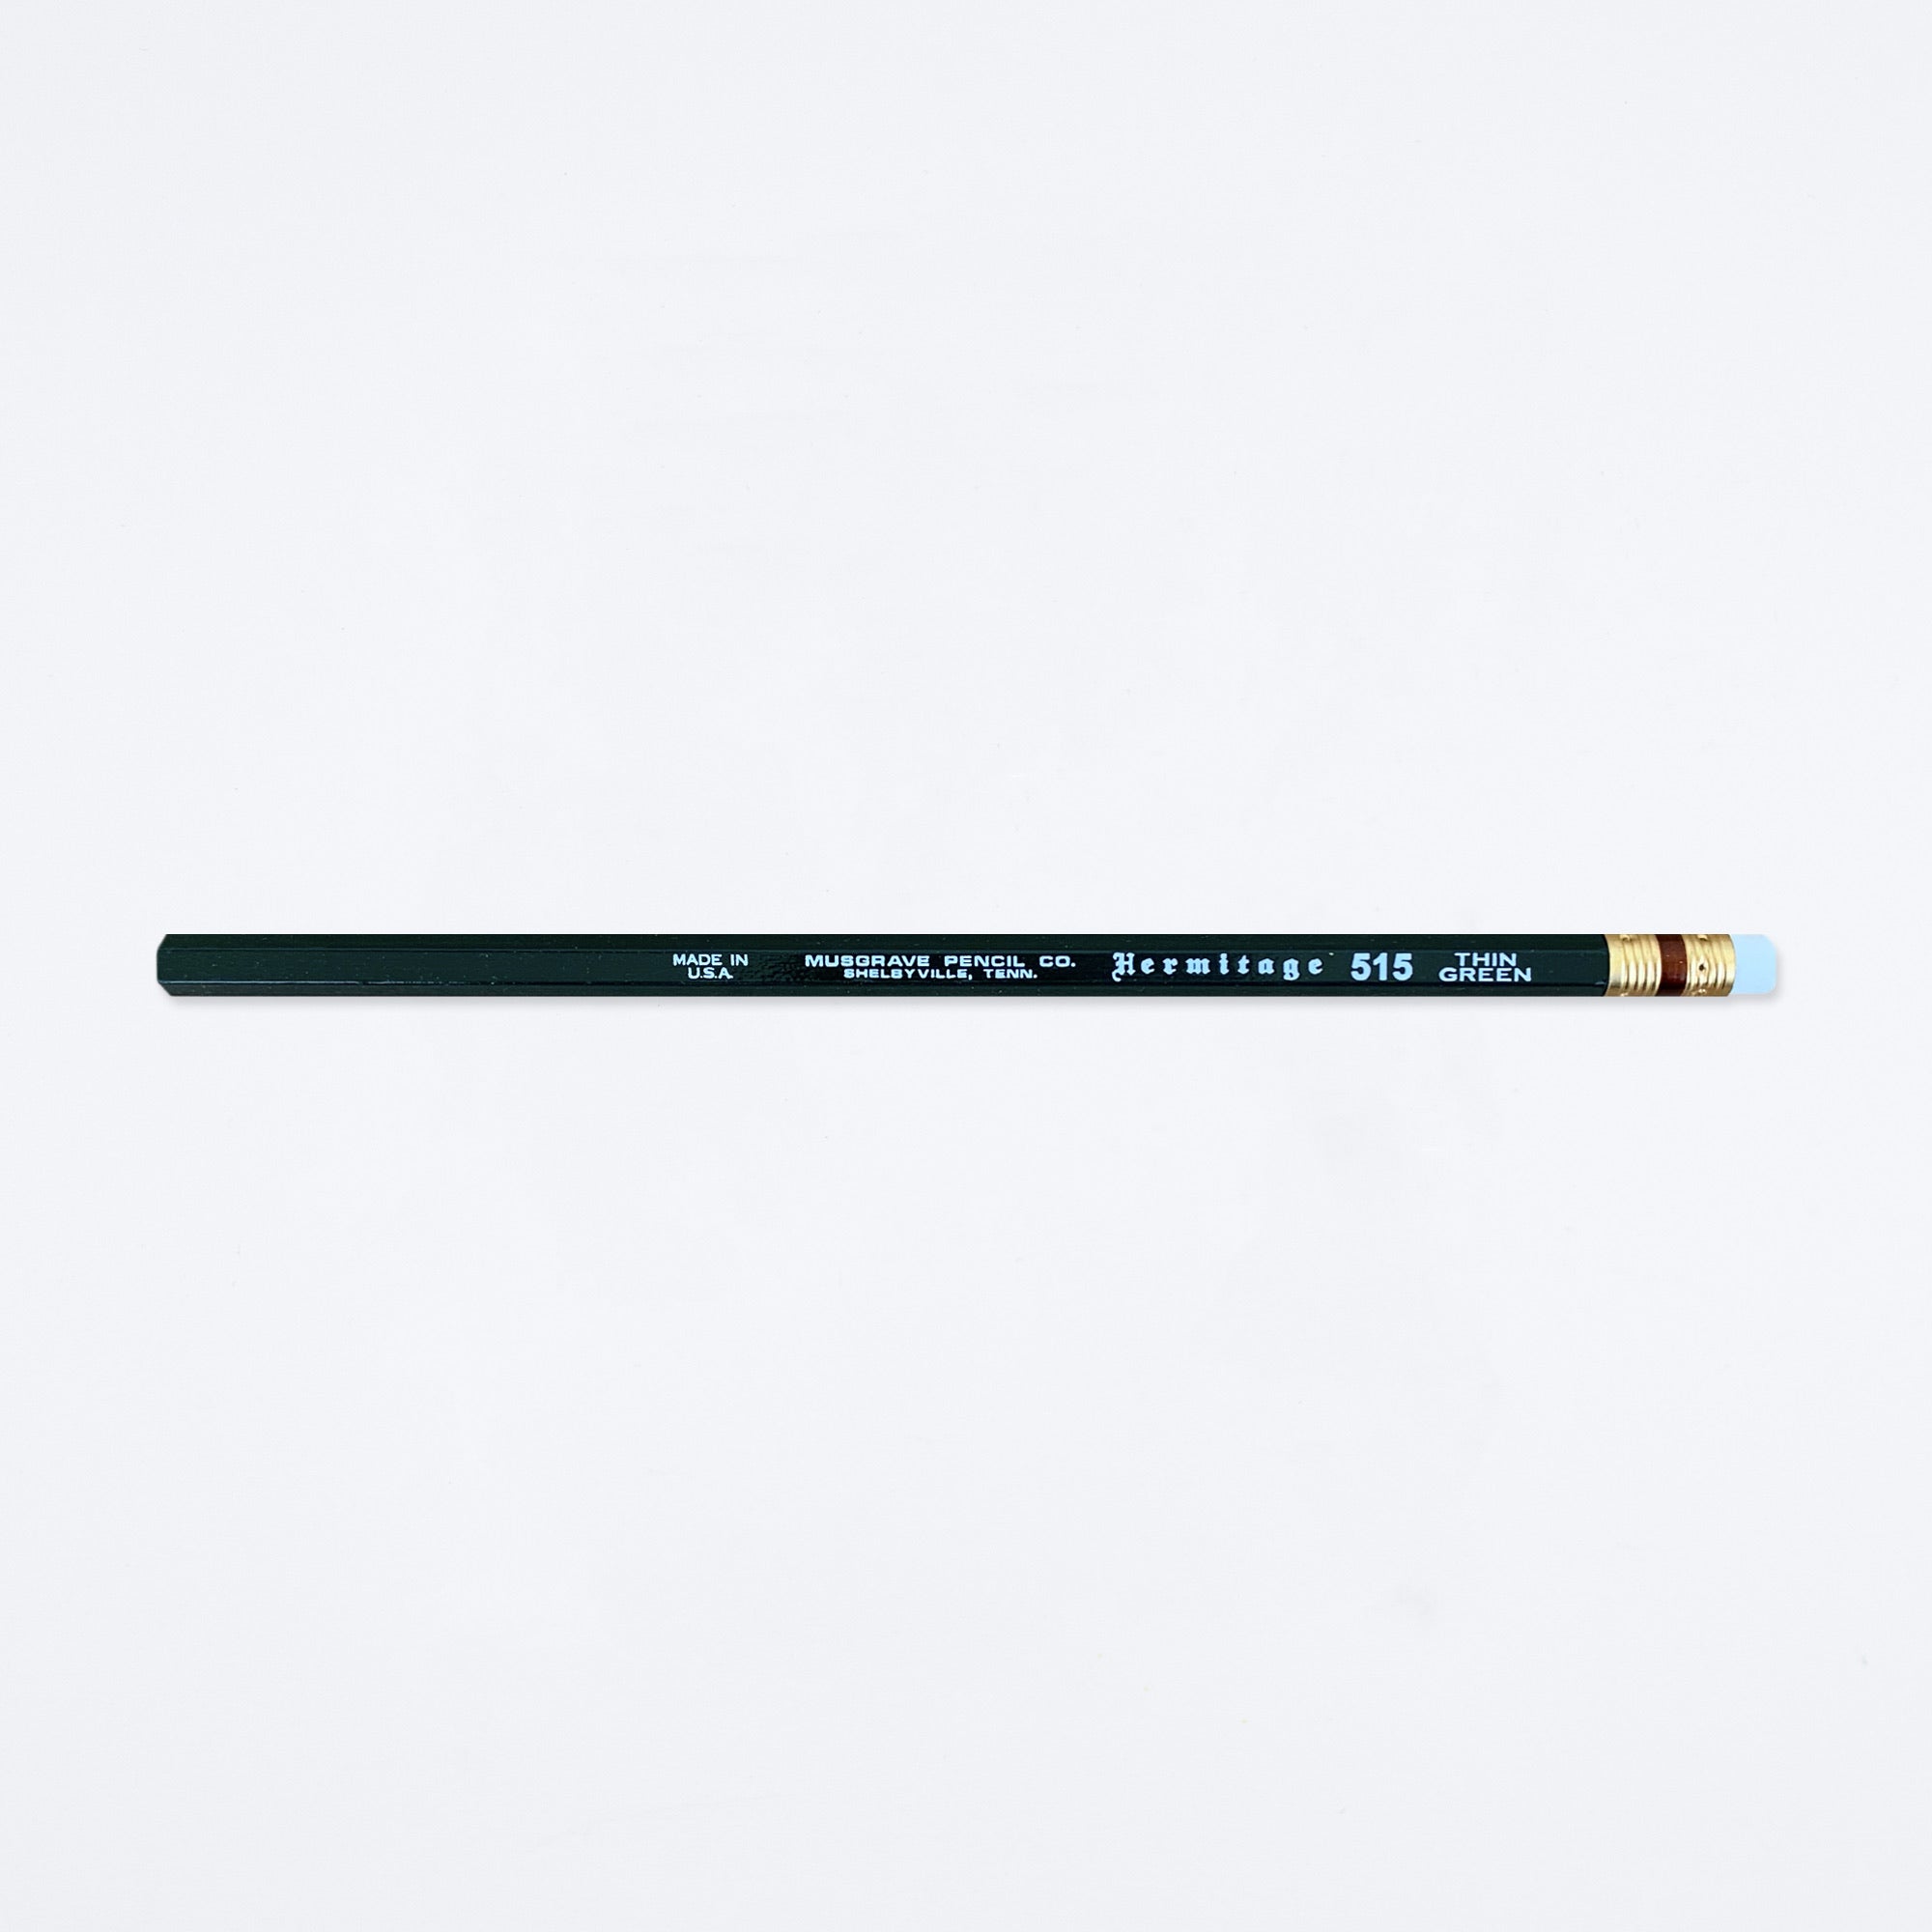 Hermitage Thin Green Pencil